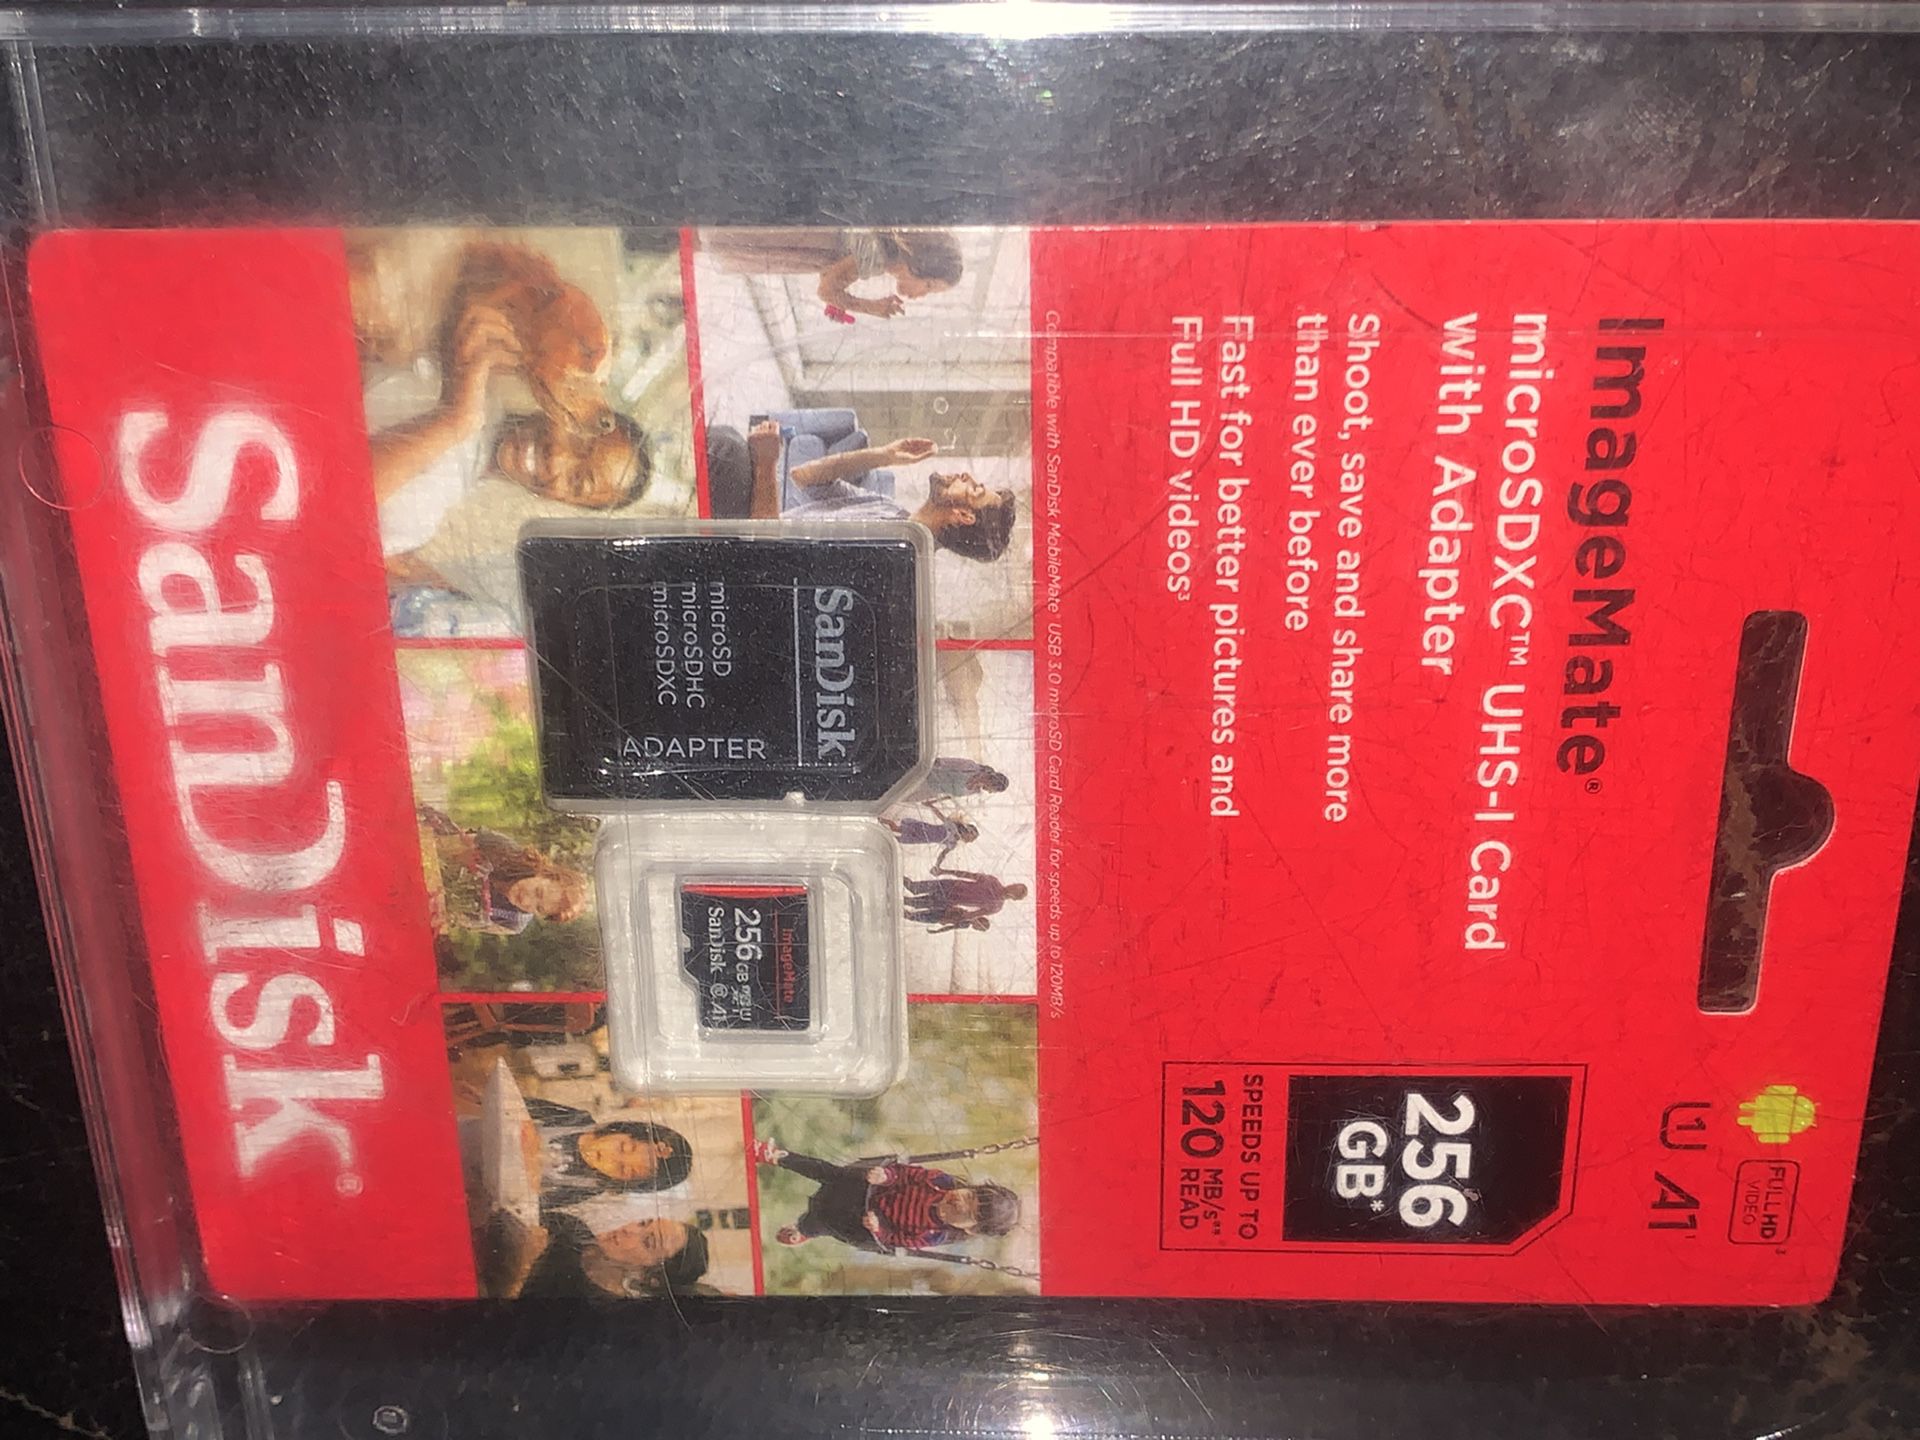 256Gb SanDisk MicroSDXC UHS-1 Card